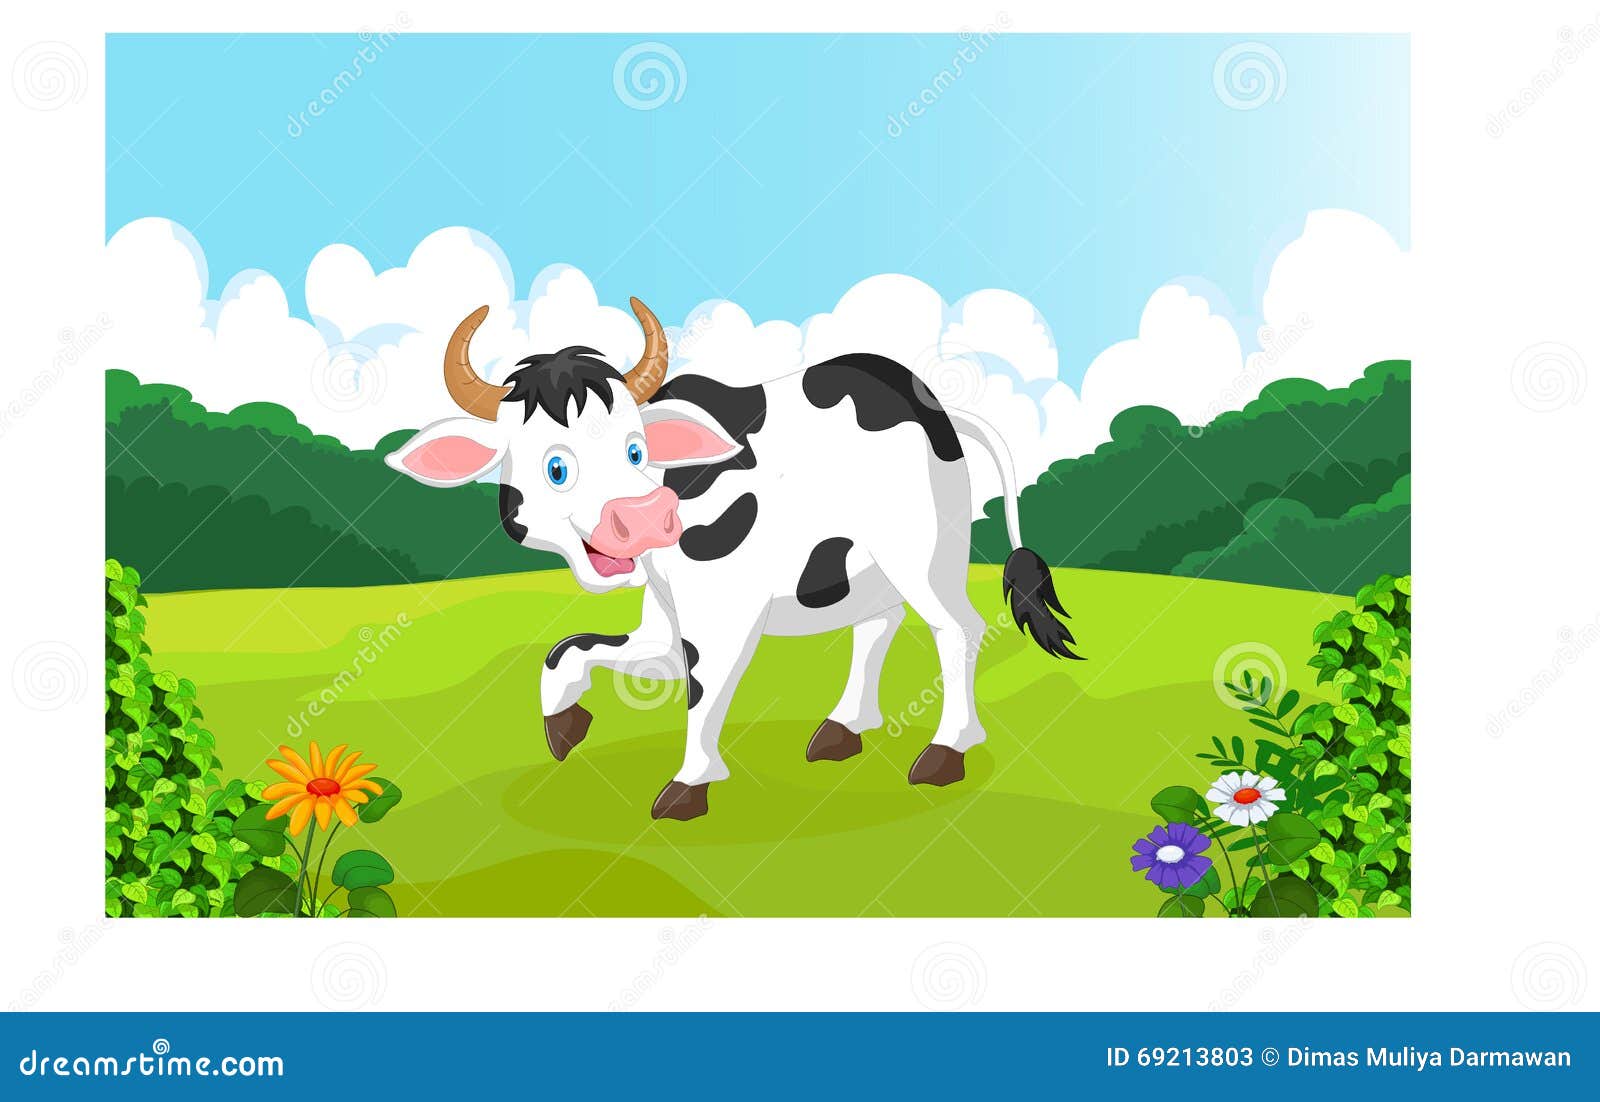 Cute cow cartoon on farm stock illustration. Illustration of icon - 69213803